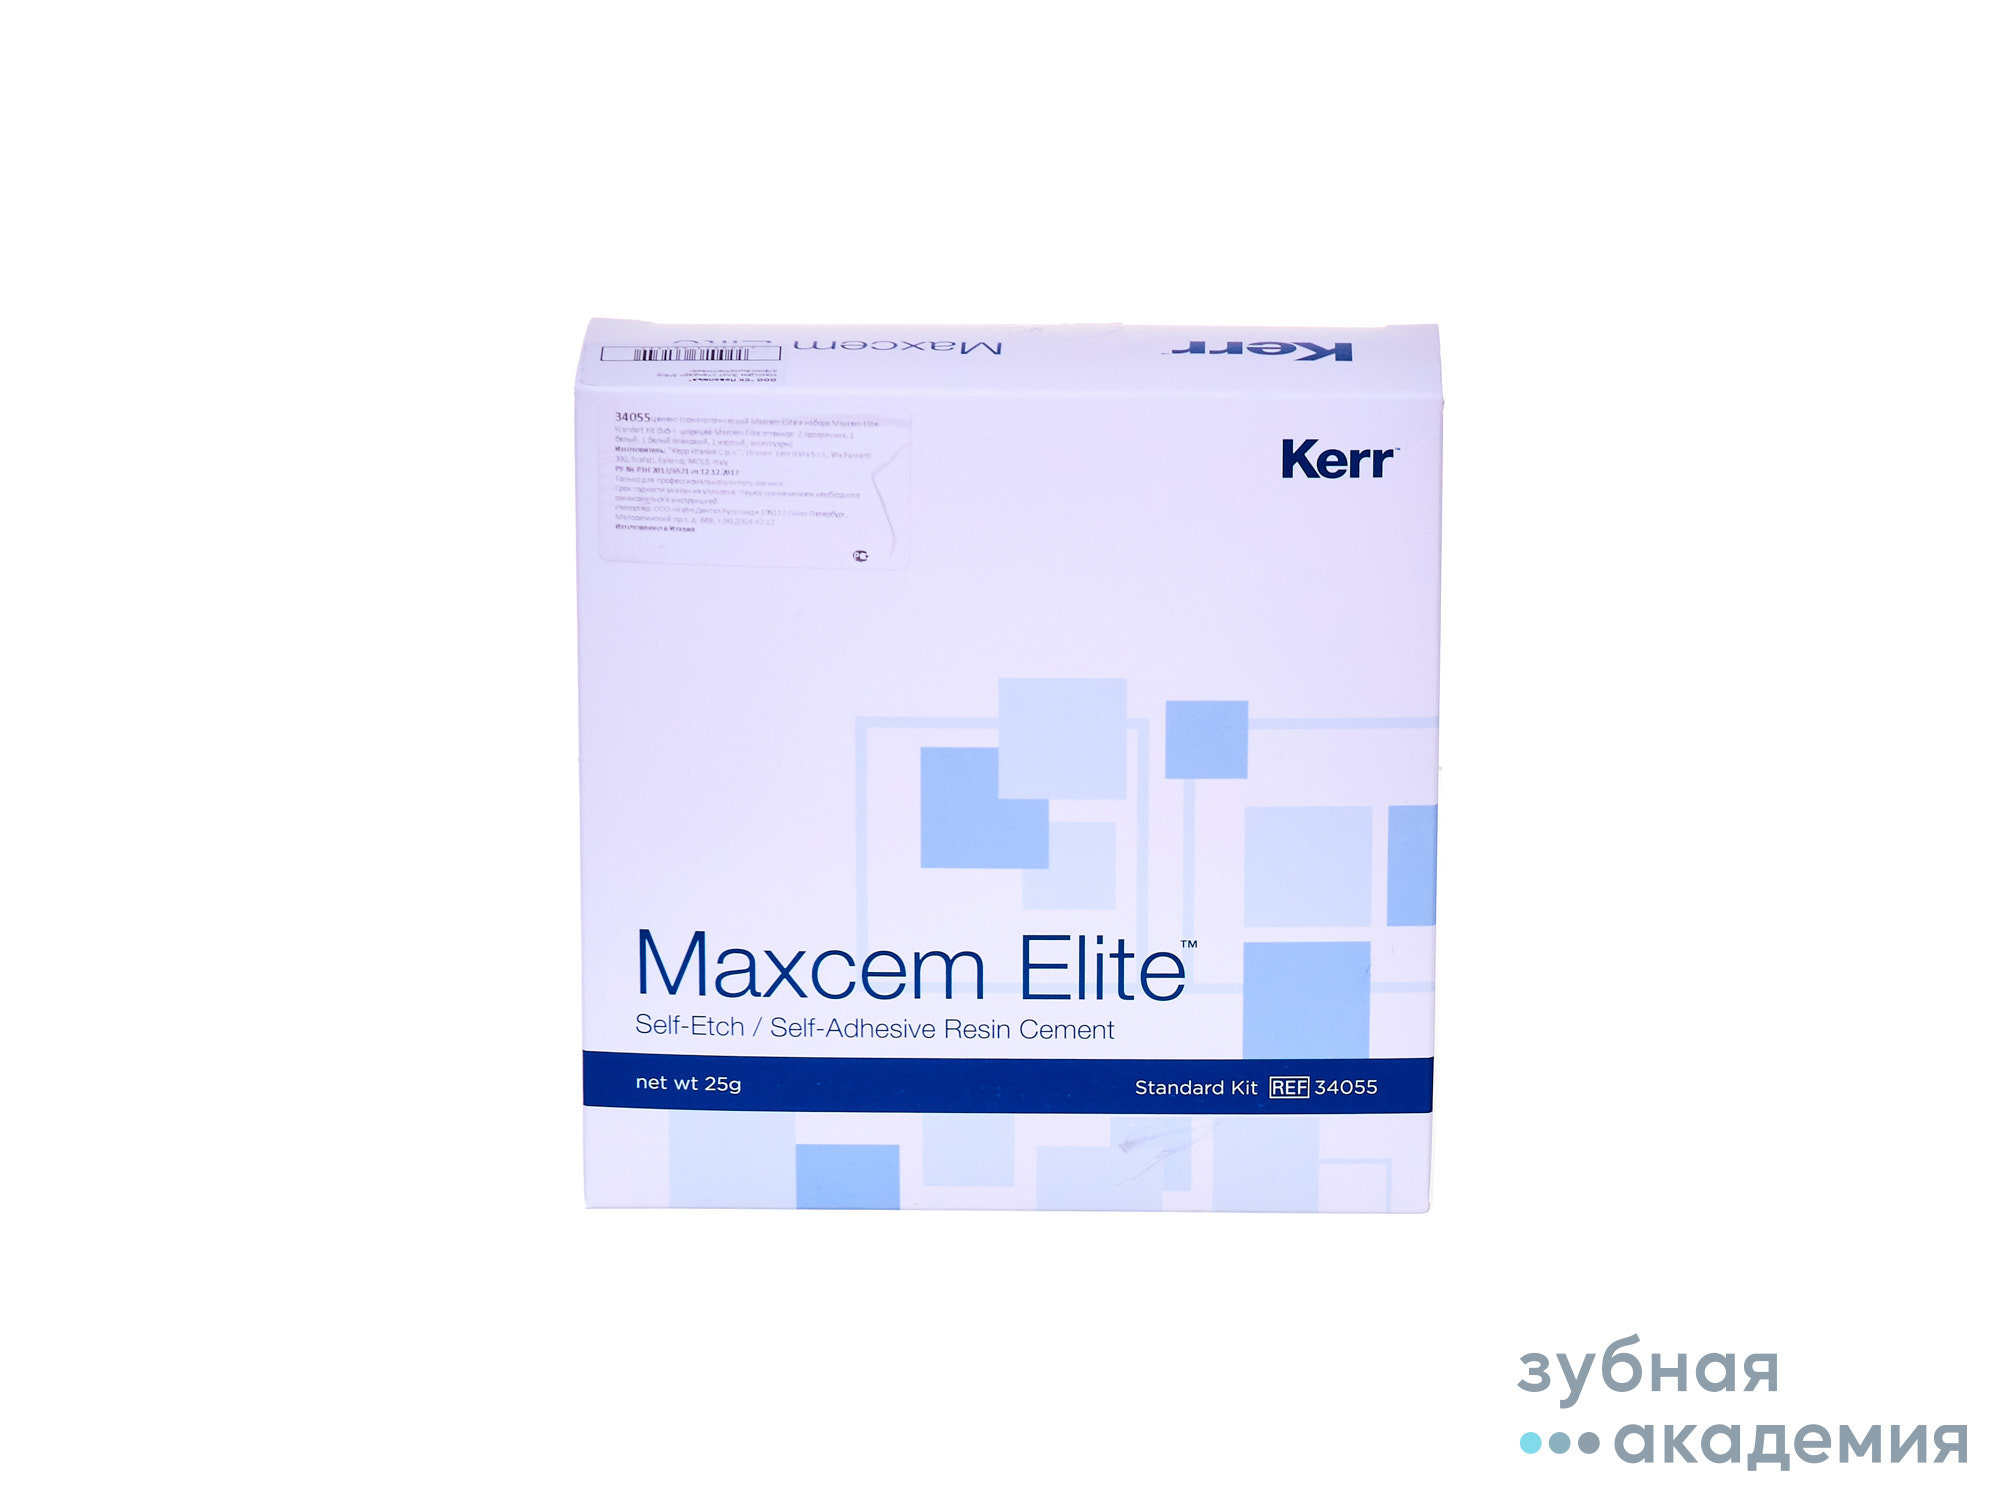 MaxCem Elite Standart Kit / Максцем Элит Стандарт Кит (1 х 5г) Kerr/Италия